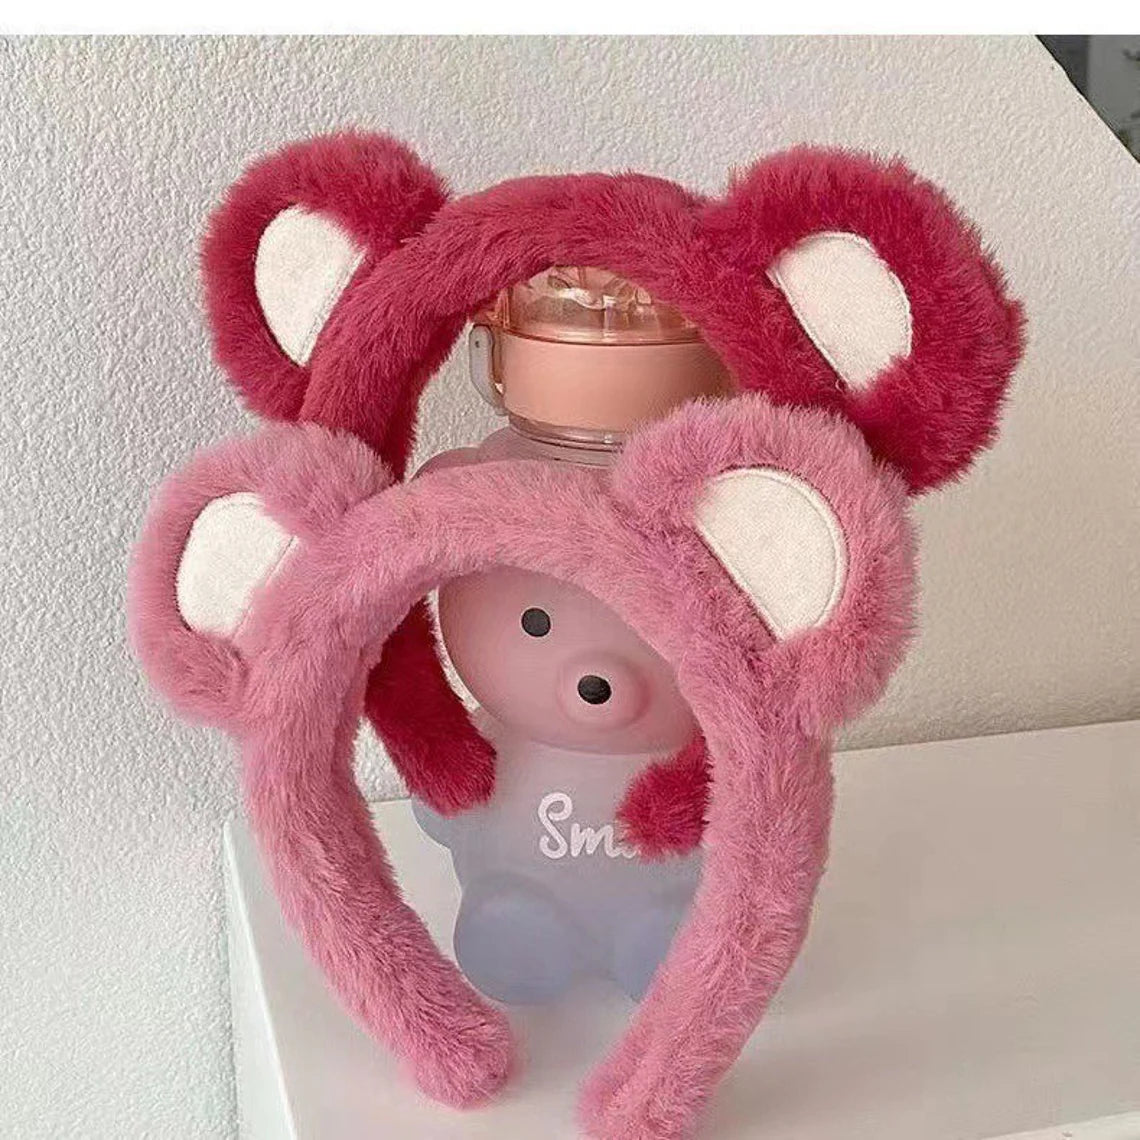 Strawberry Bear Lotso Toy Story Headband and Hair Accessory Outfits